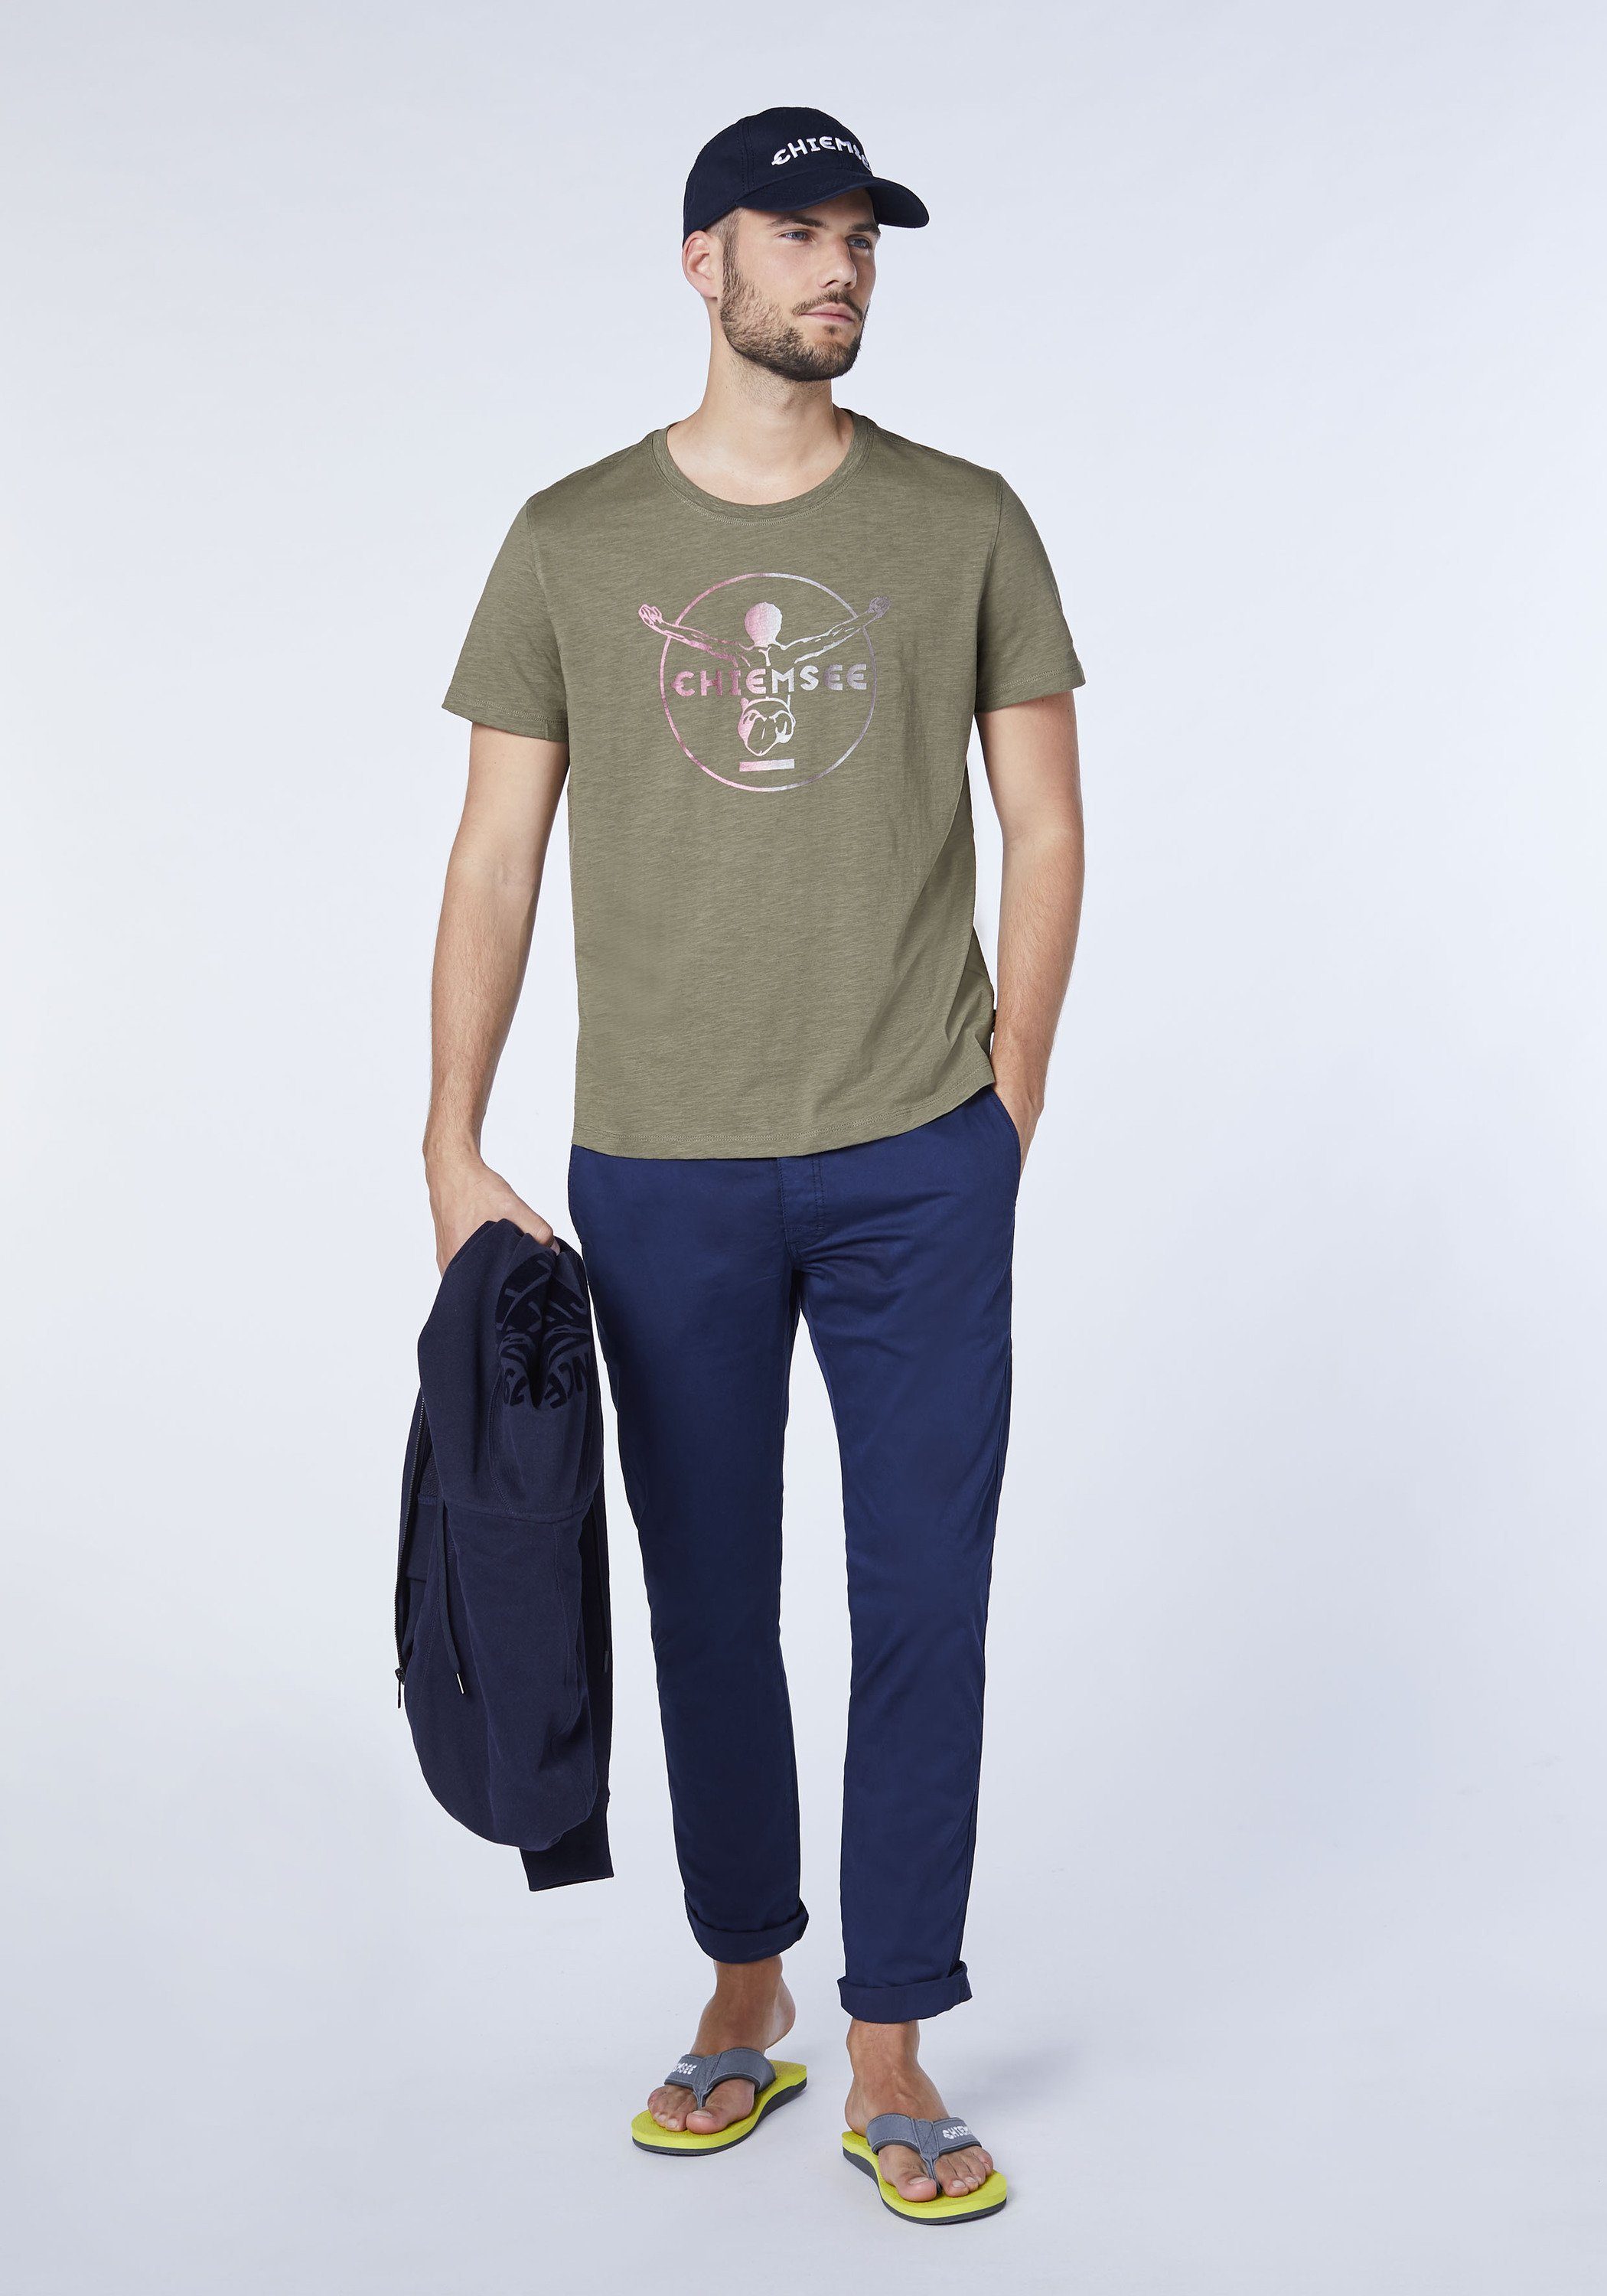 Chiemsee Print-Shirt T-Shirt Label-Symbol gedrucktem 1 Dusty Olive mit